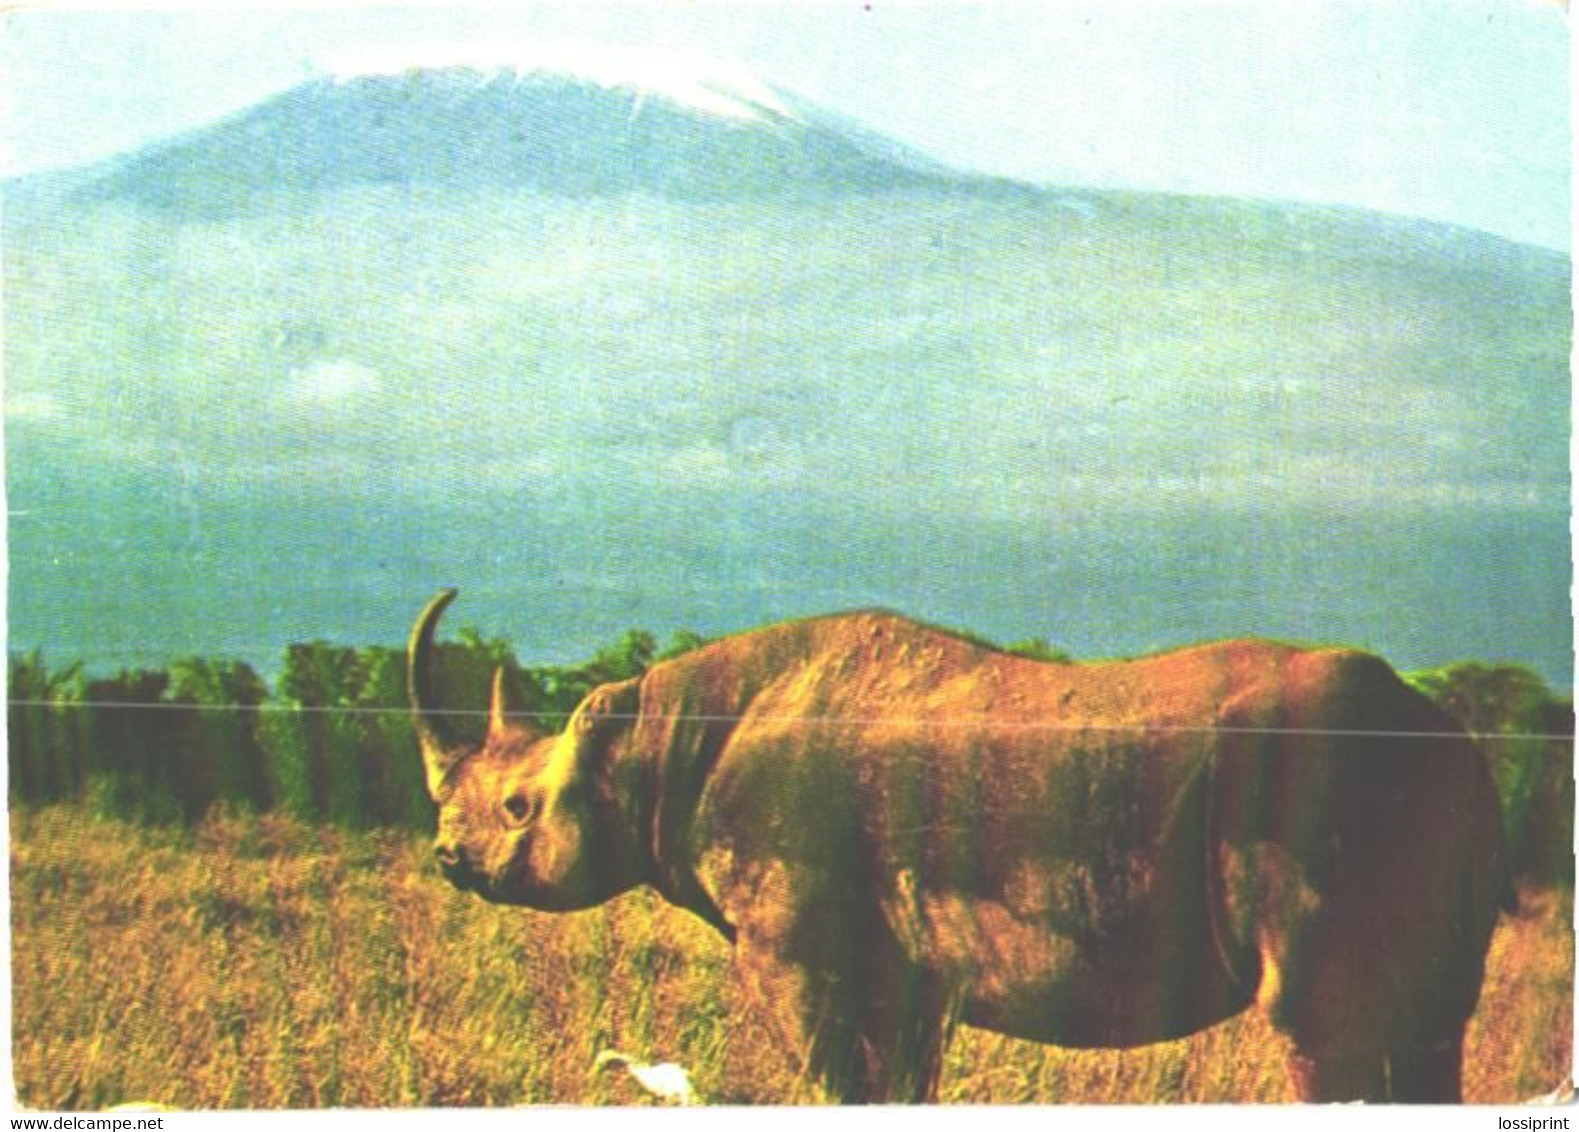 Rhinoceros And Kilimanjaro Volcano - Rhinozeros